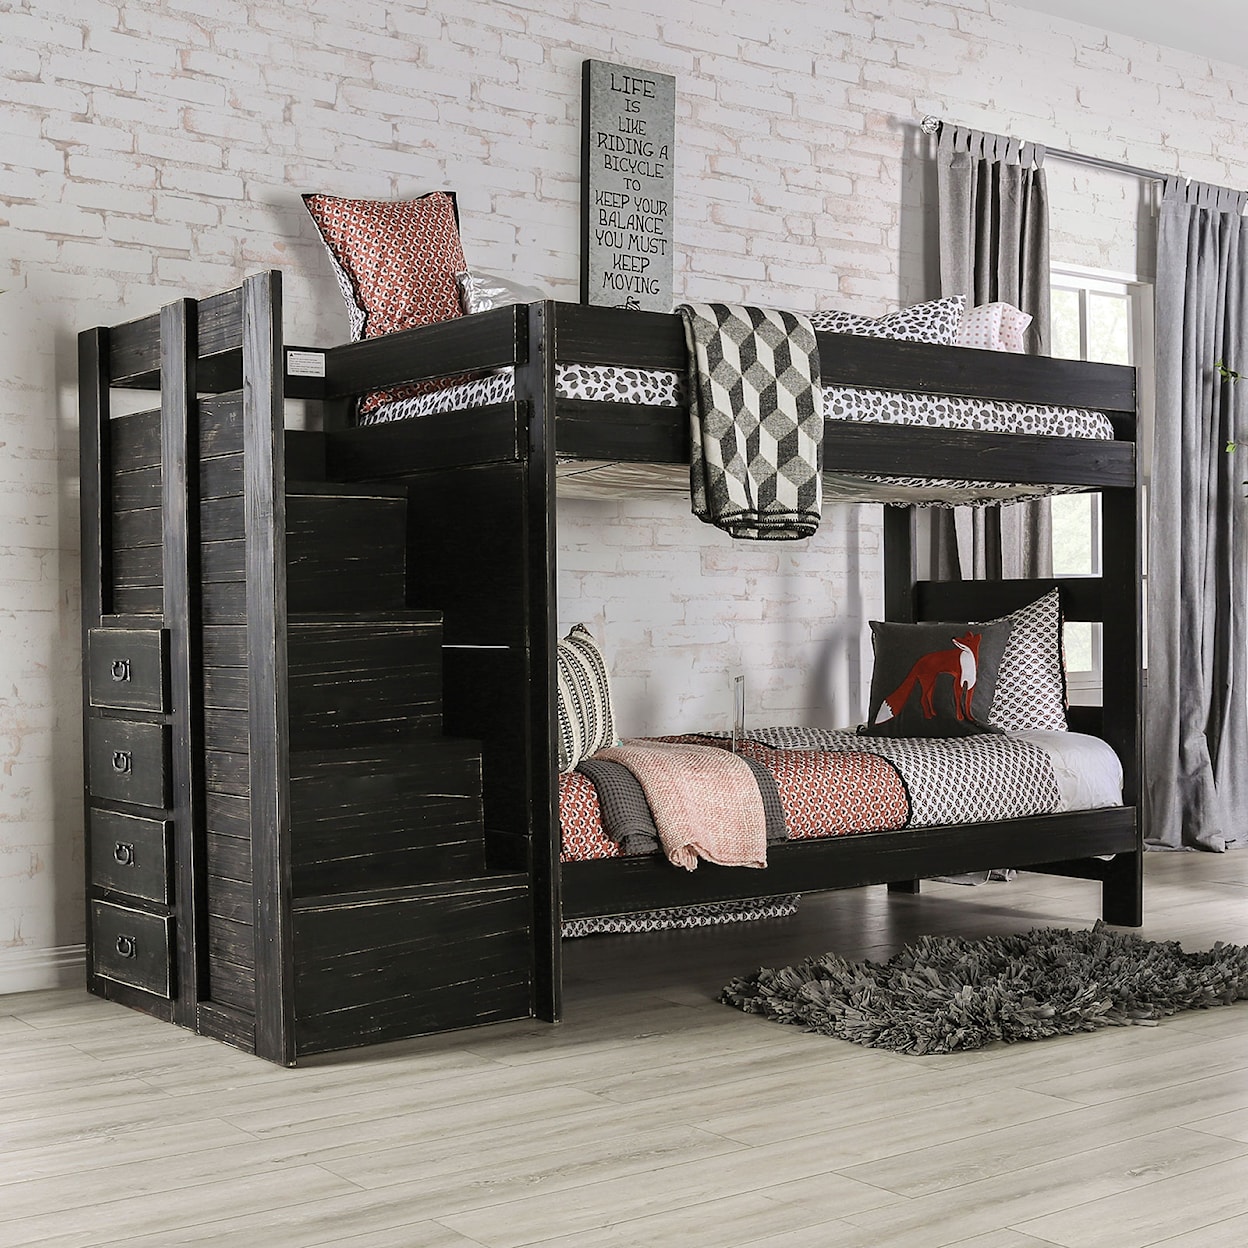 Furniture of America Ampelios Twin Bunk Bed